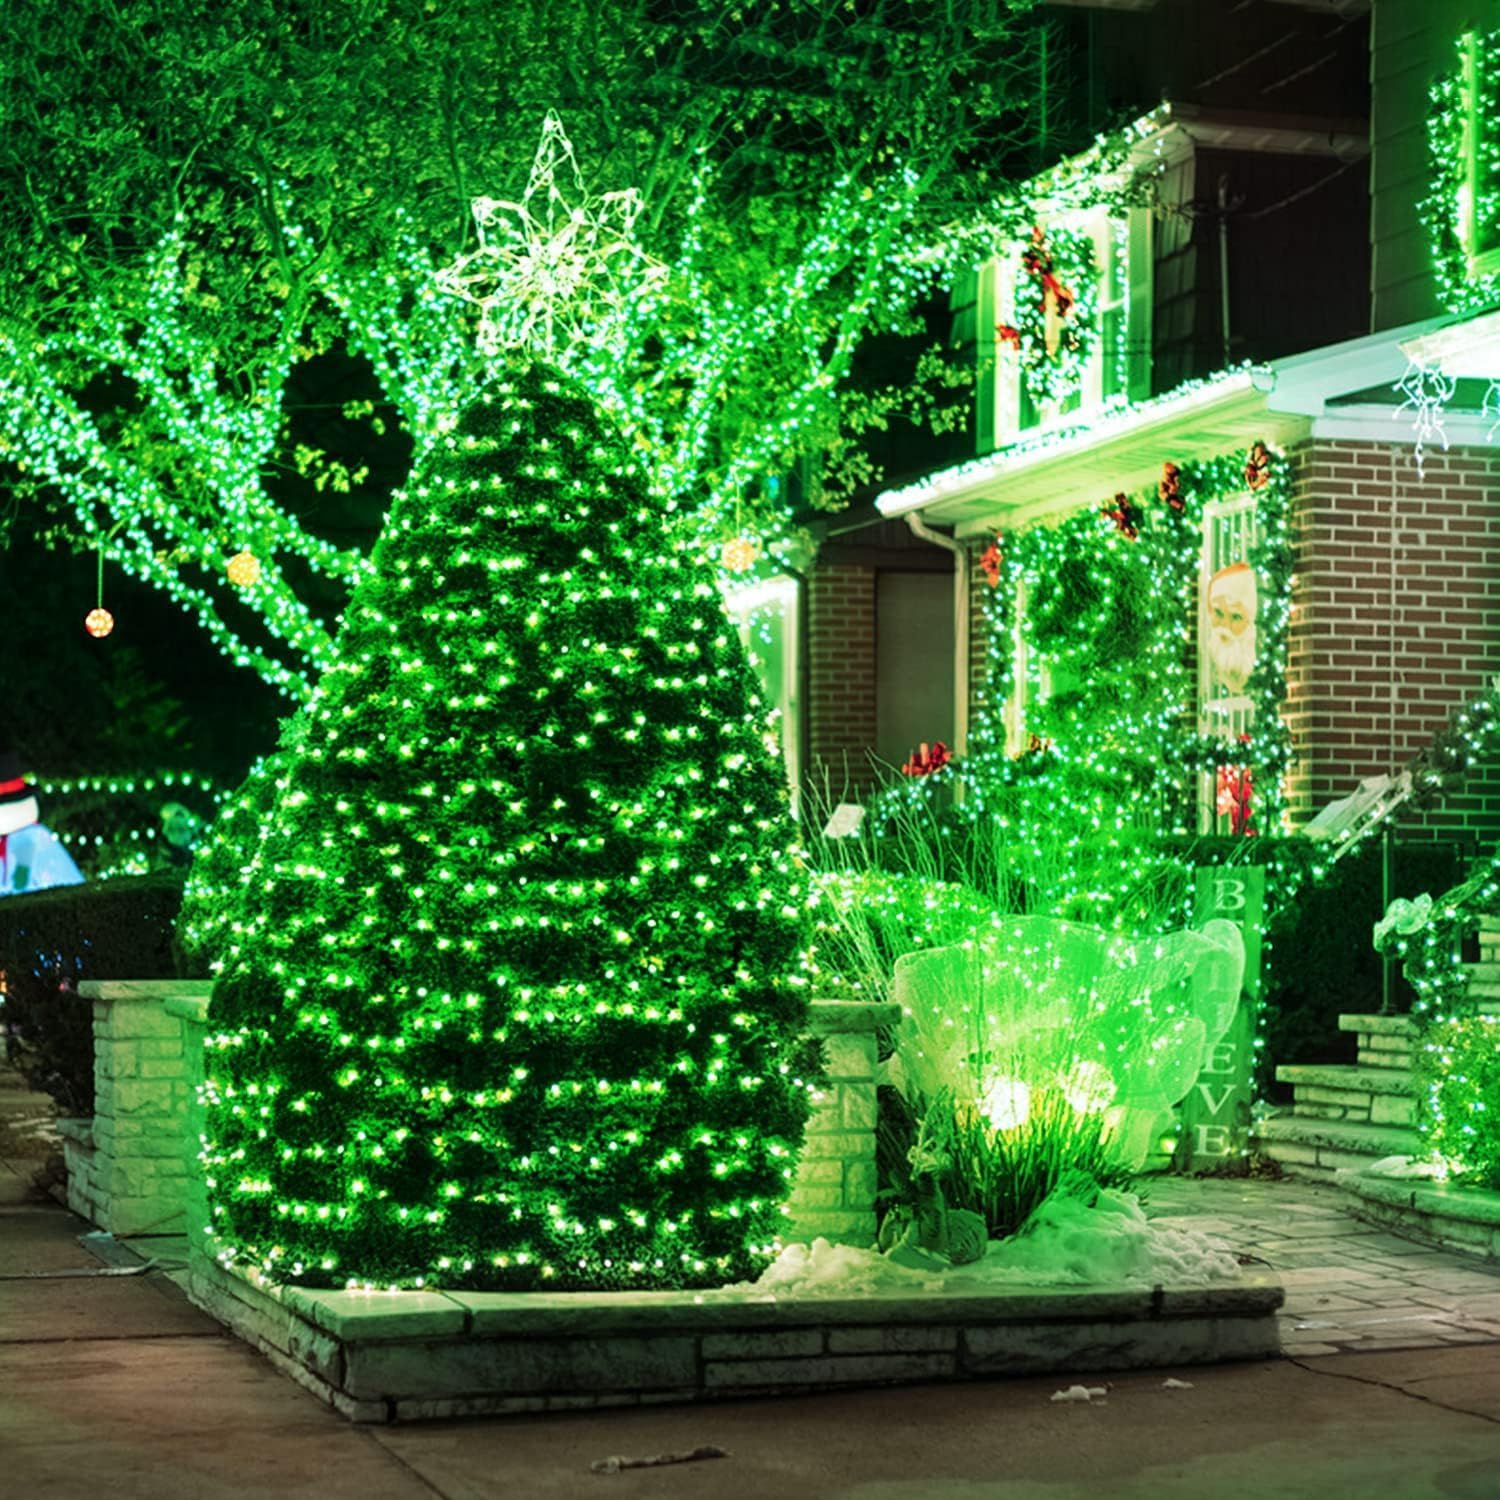 A beautifully lit green Christmas tree.